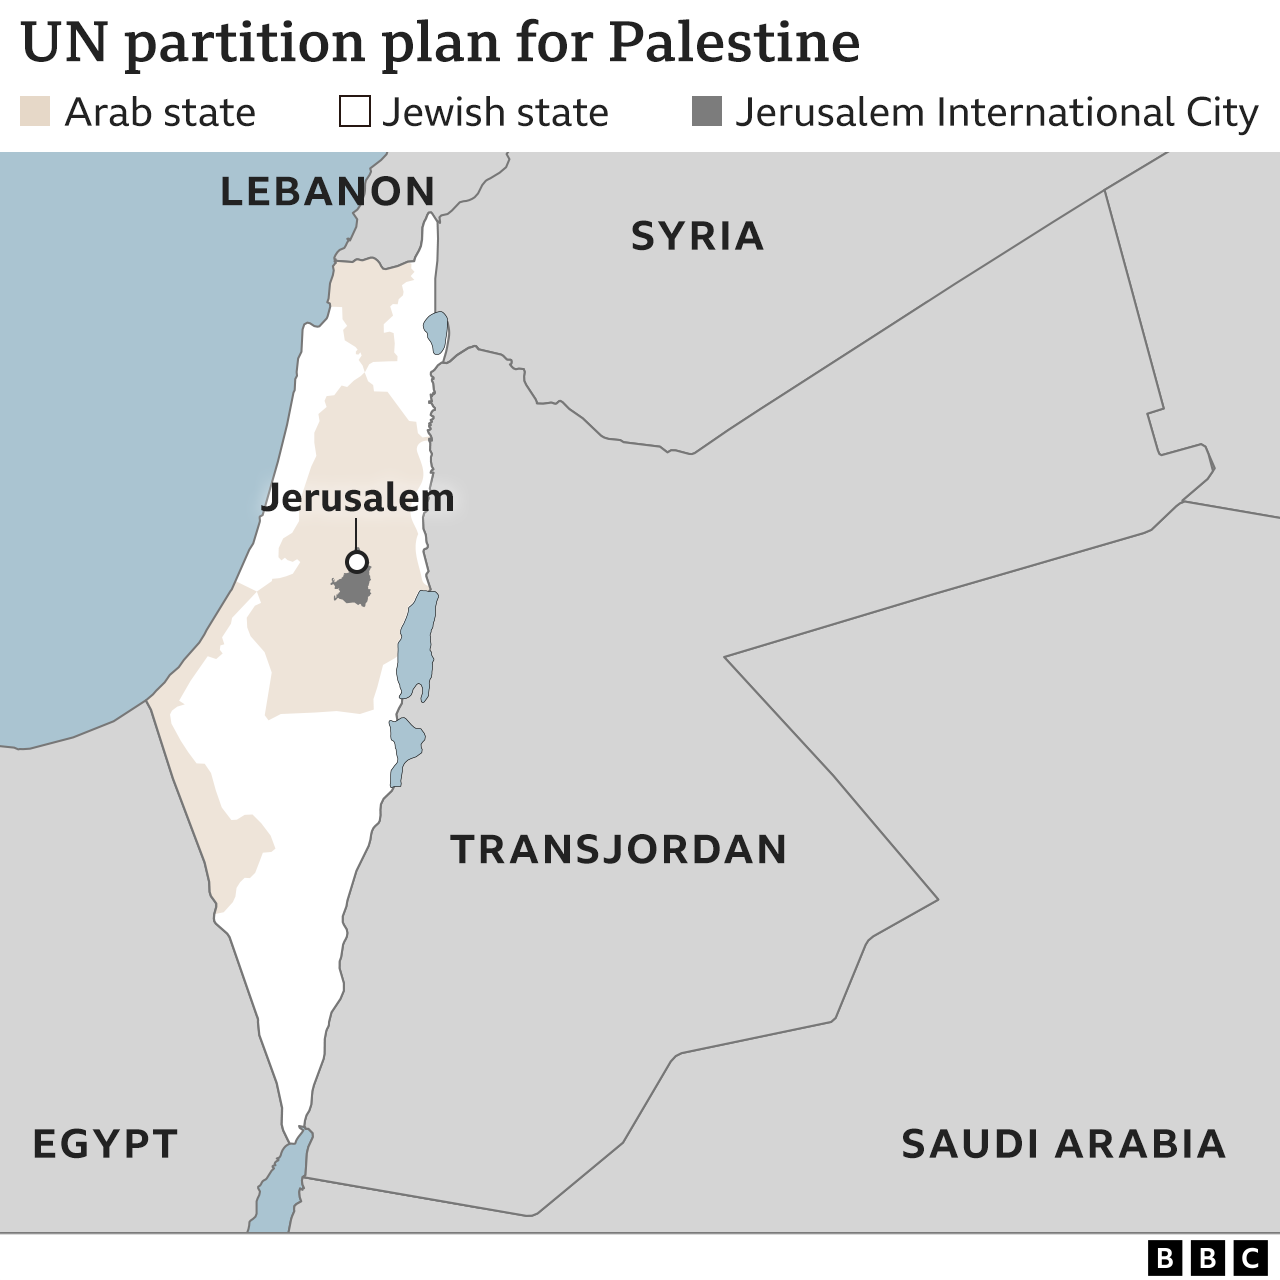 Map showing UN partition plan for Palestine